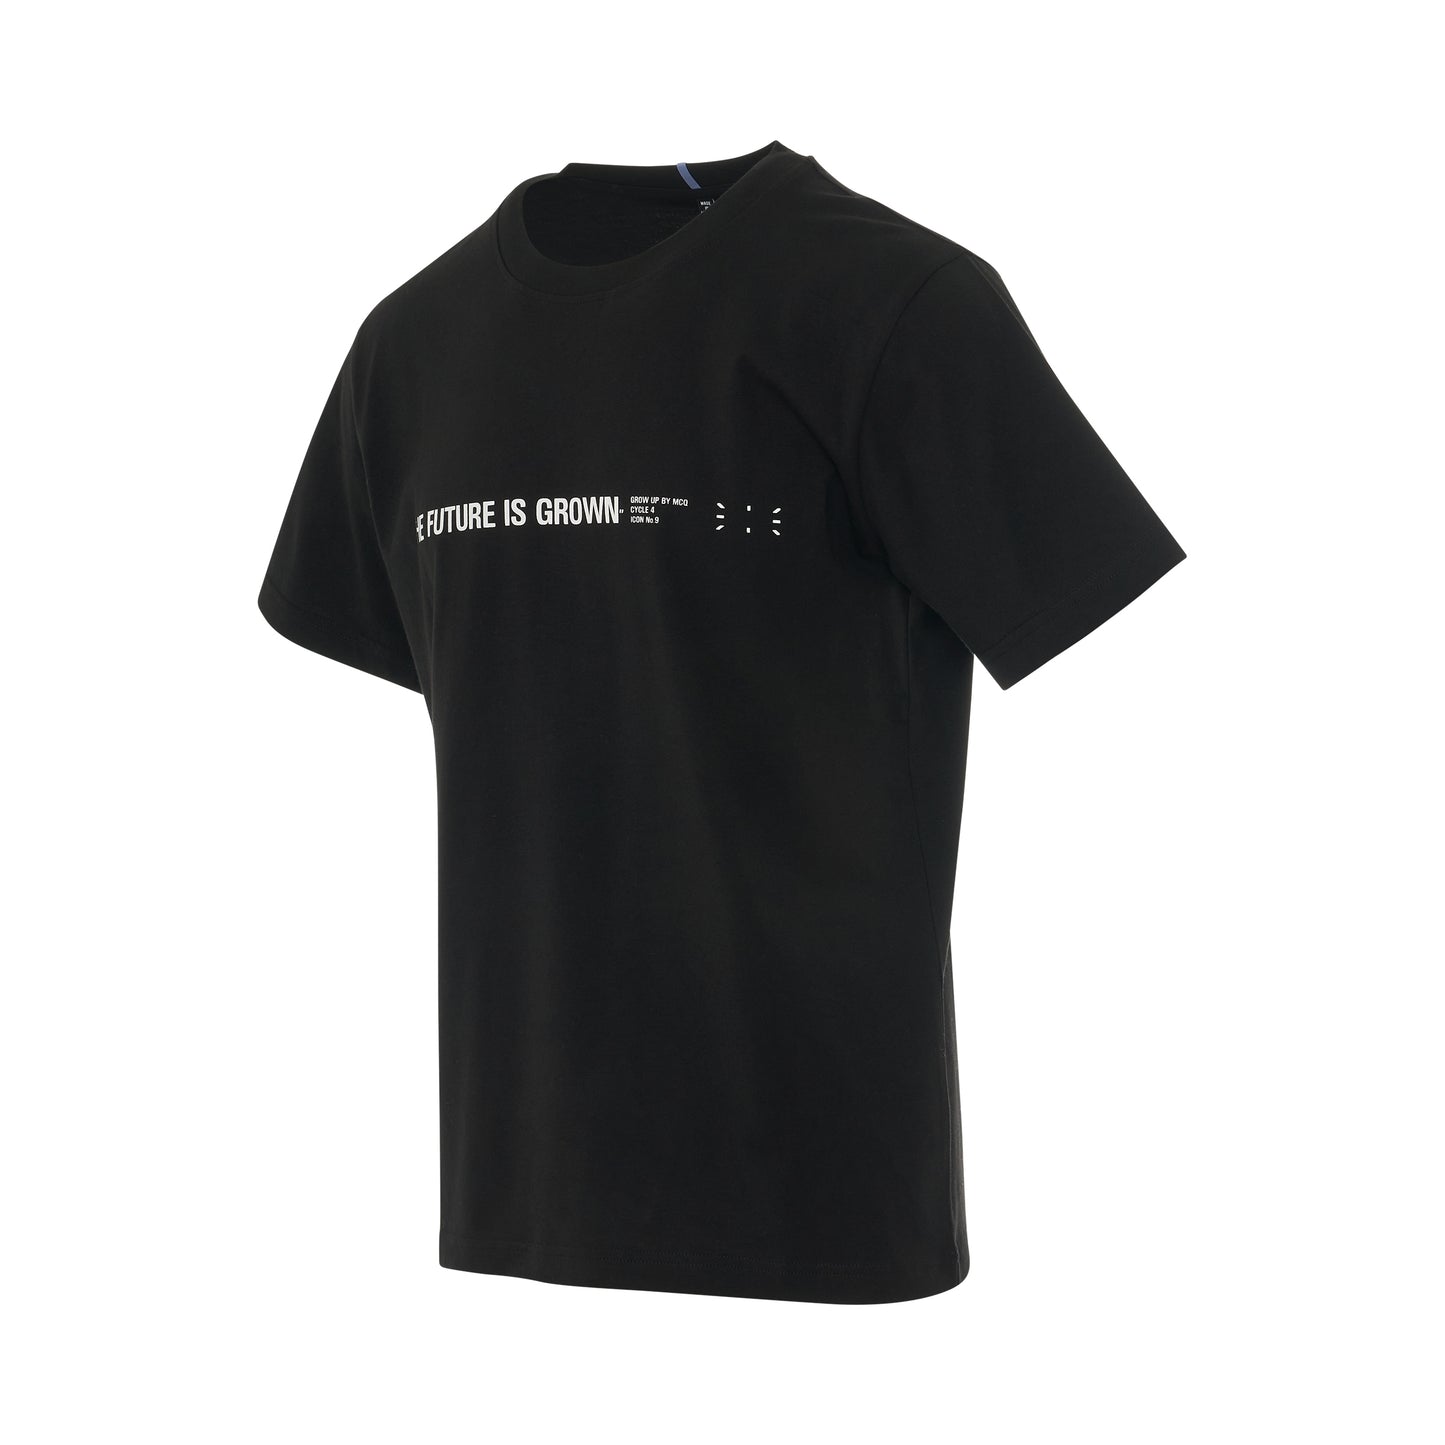 Grow Up Manifesto T-Shirt in Black